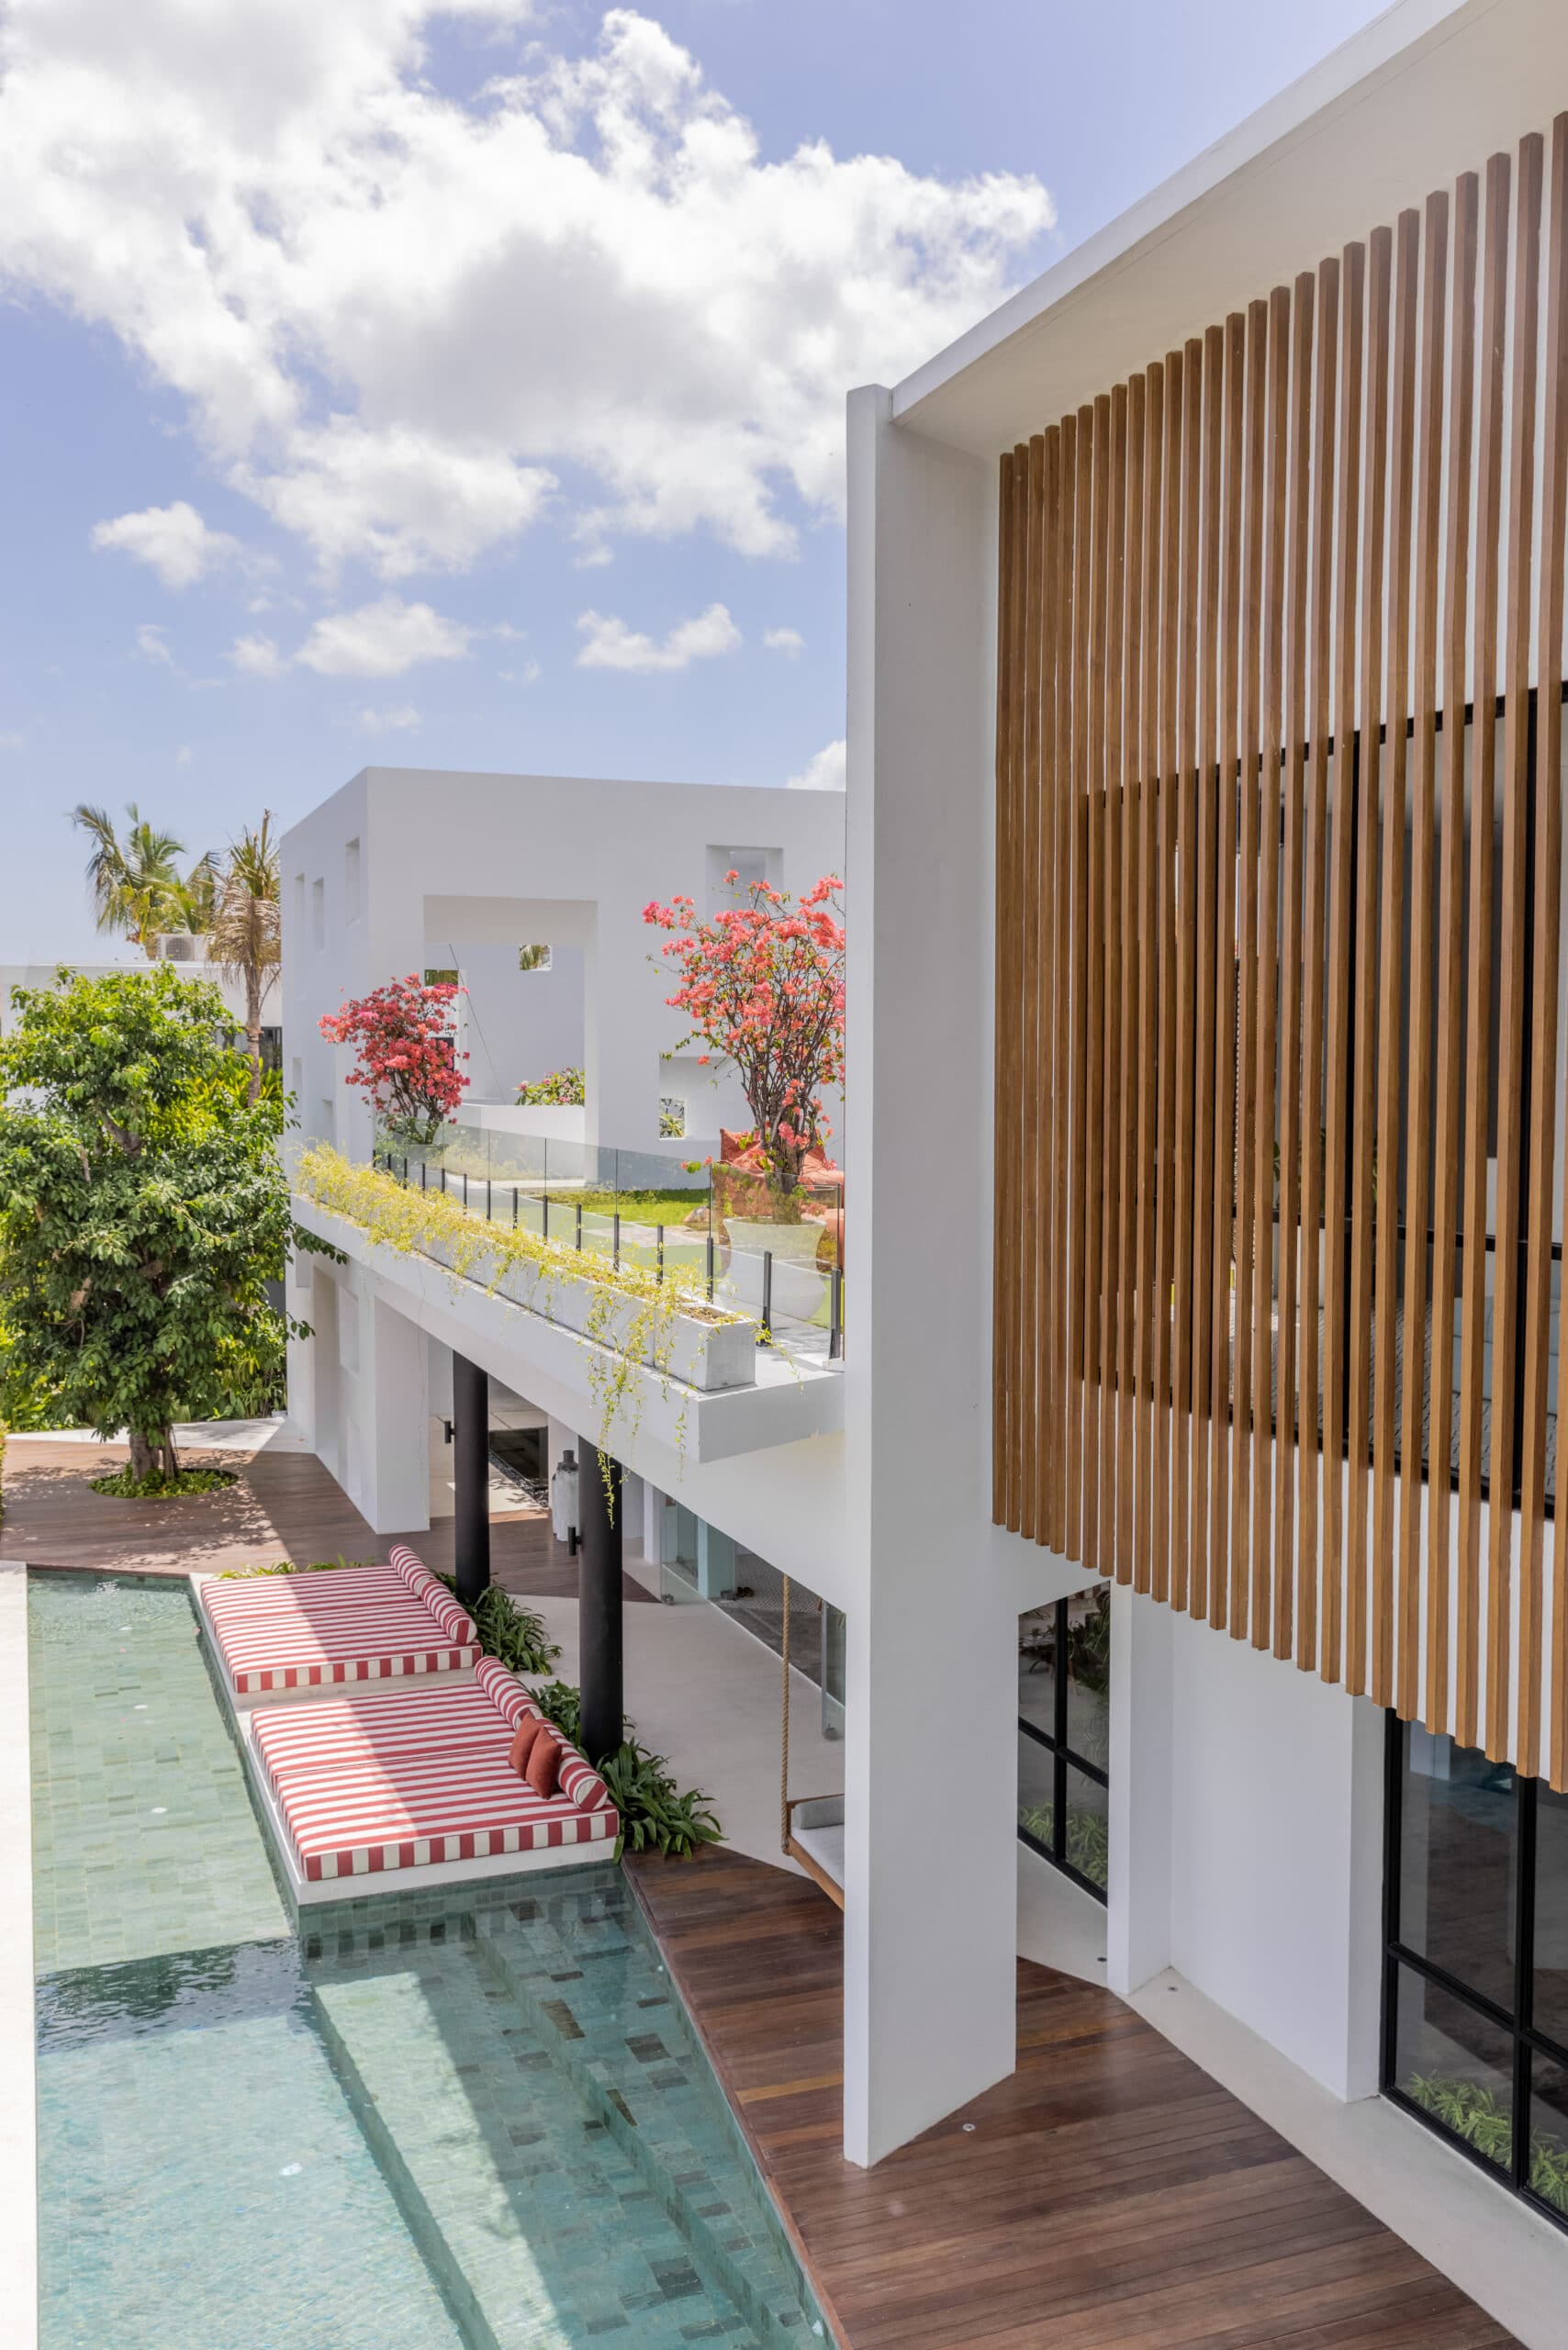 Design Assembly - Mandala the Oasis - Bali Architect - Interior Design - Bali Villa - Building Facade